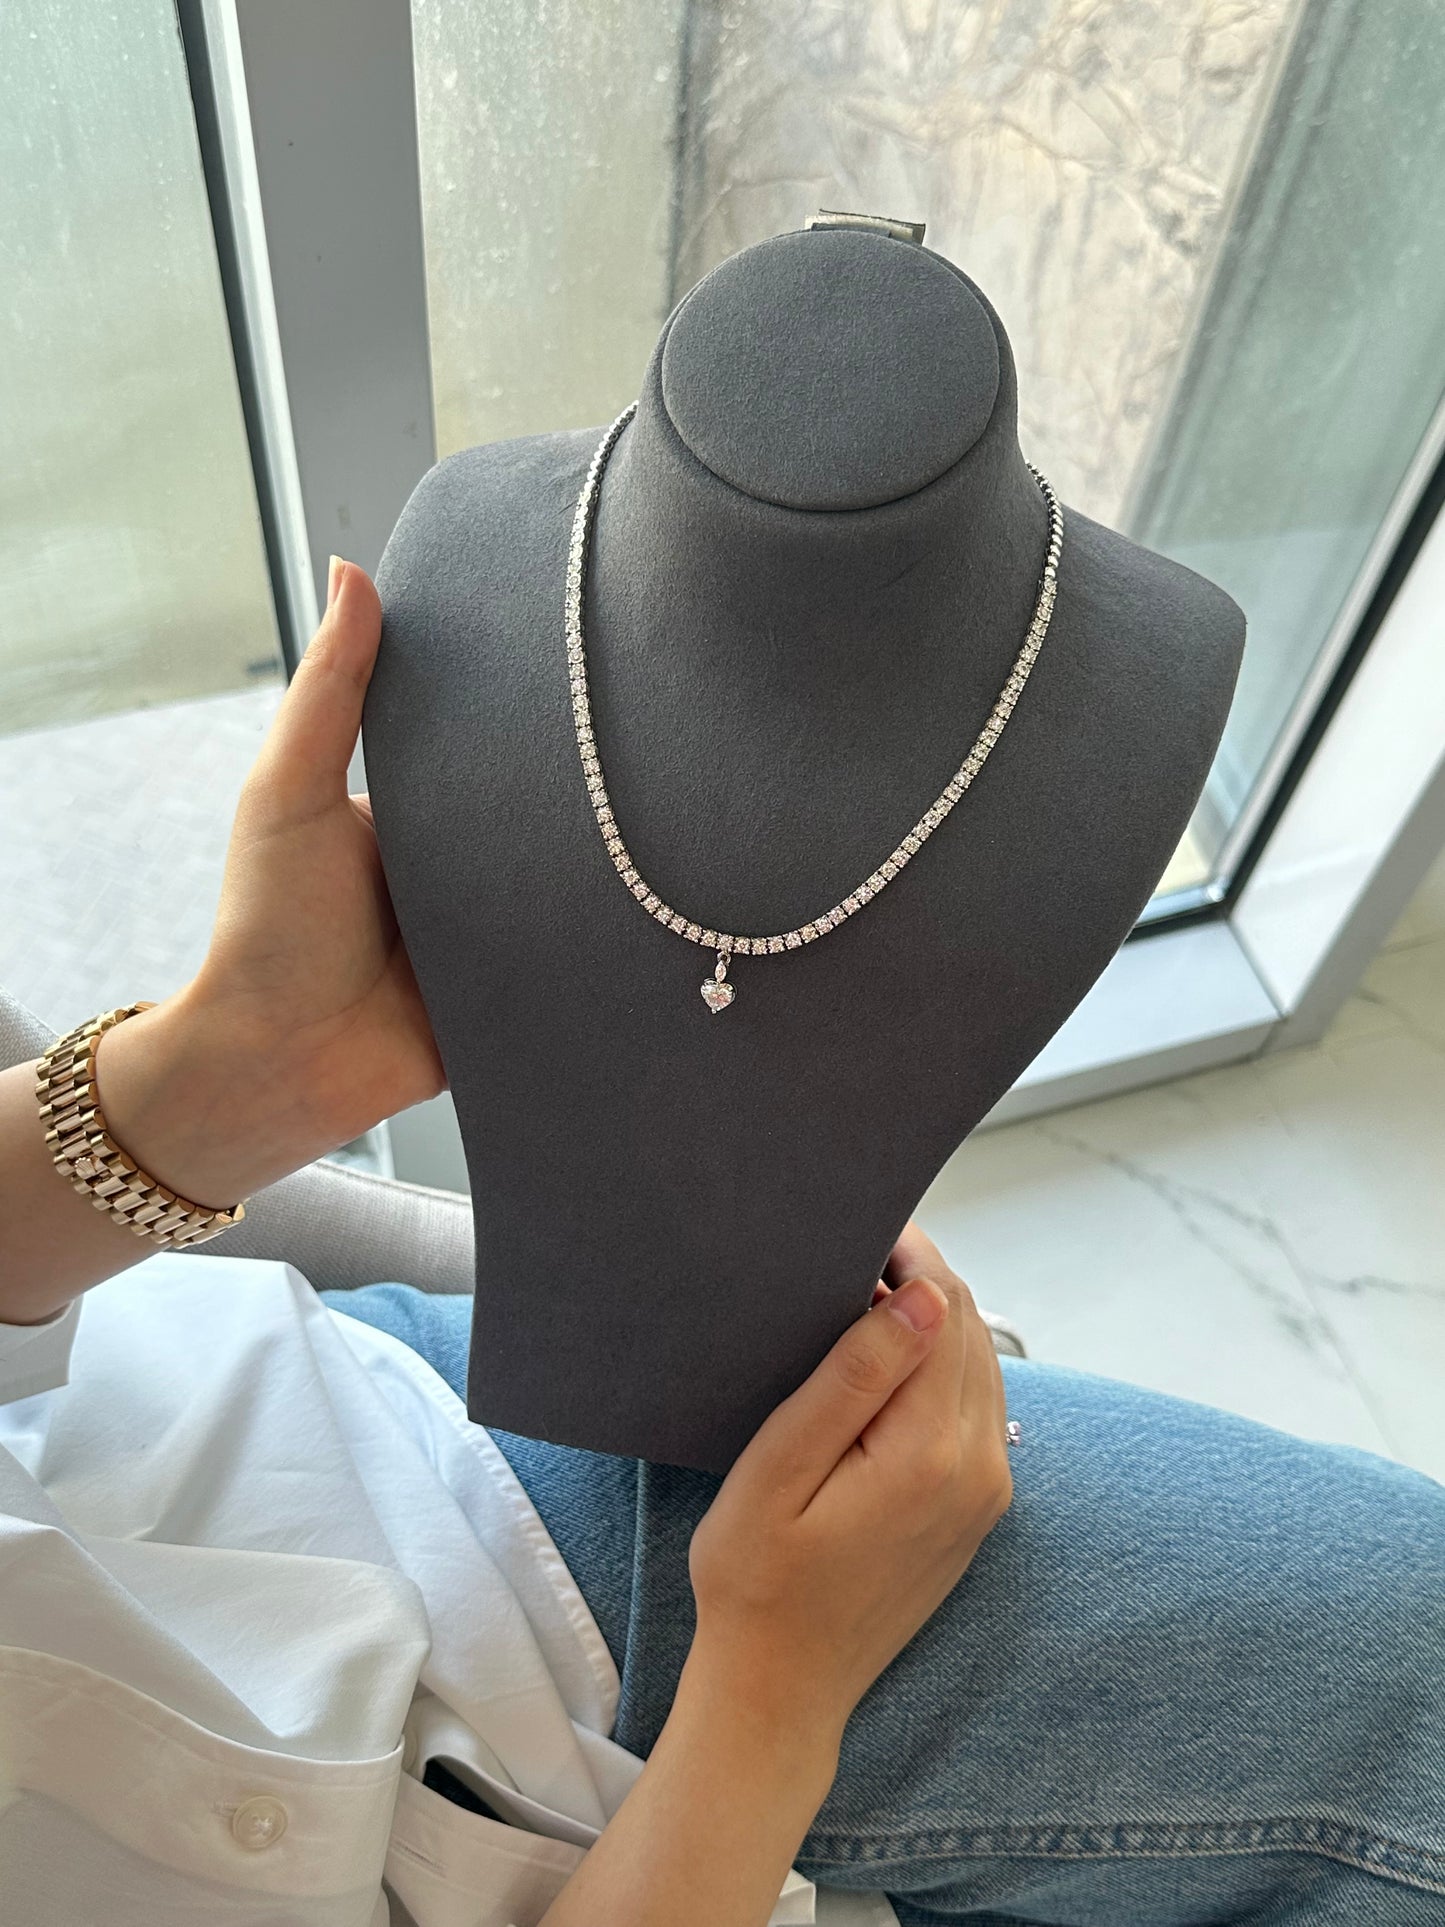 IGI 1.00ct Detachable Heart Diamond Tennis Necklace